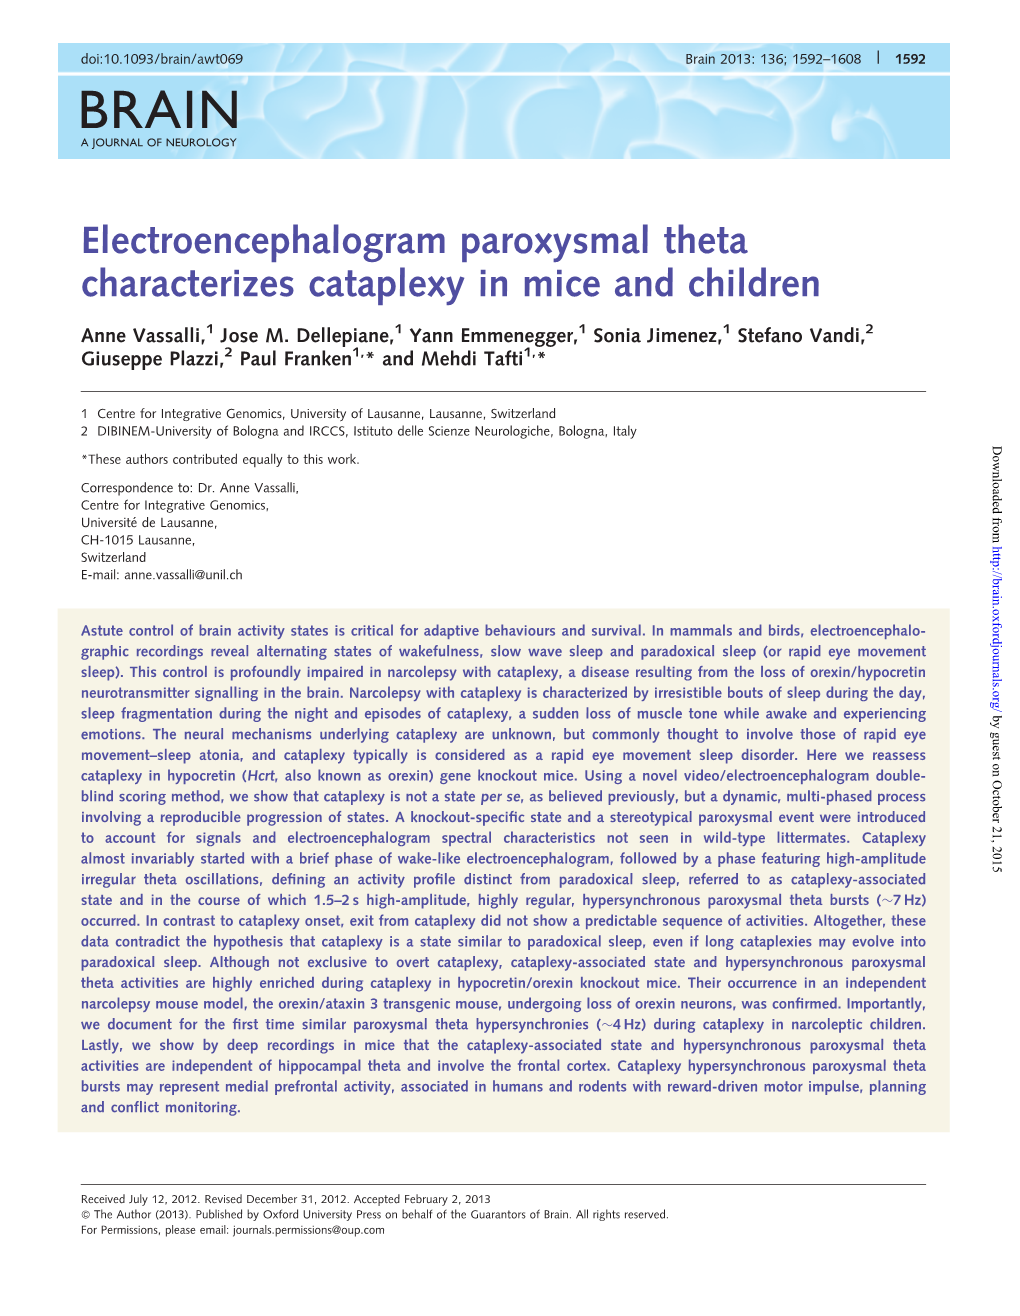 Electroencephalogram Paroxysmal Theta Characterizes Cataplexy in Mice and Children